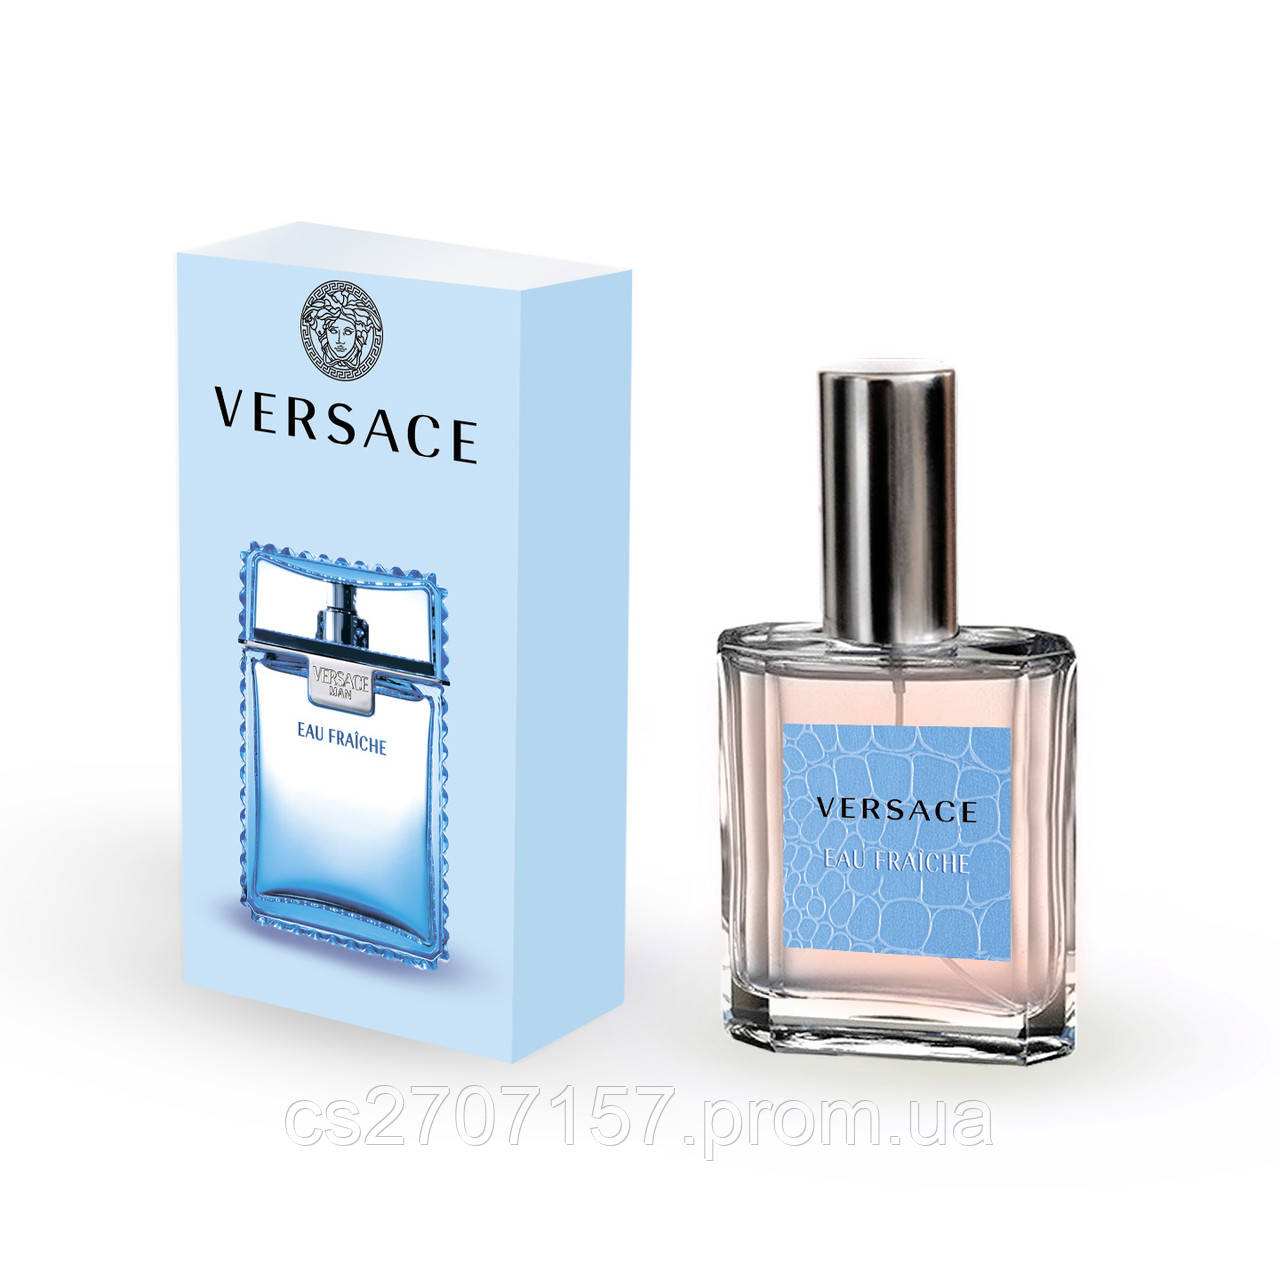 Чоловічий міні парфуми Versace Man Eau Fraiche 35 мл